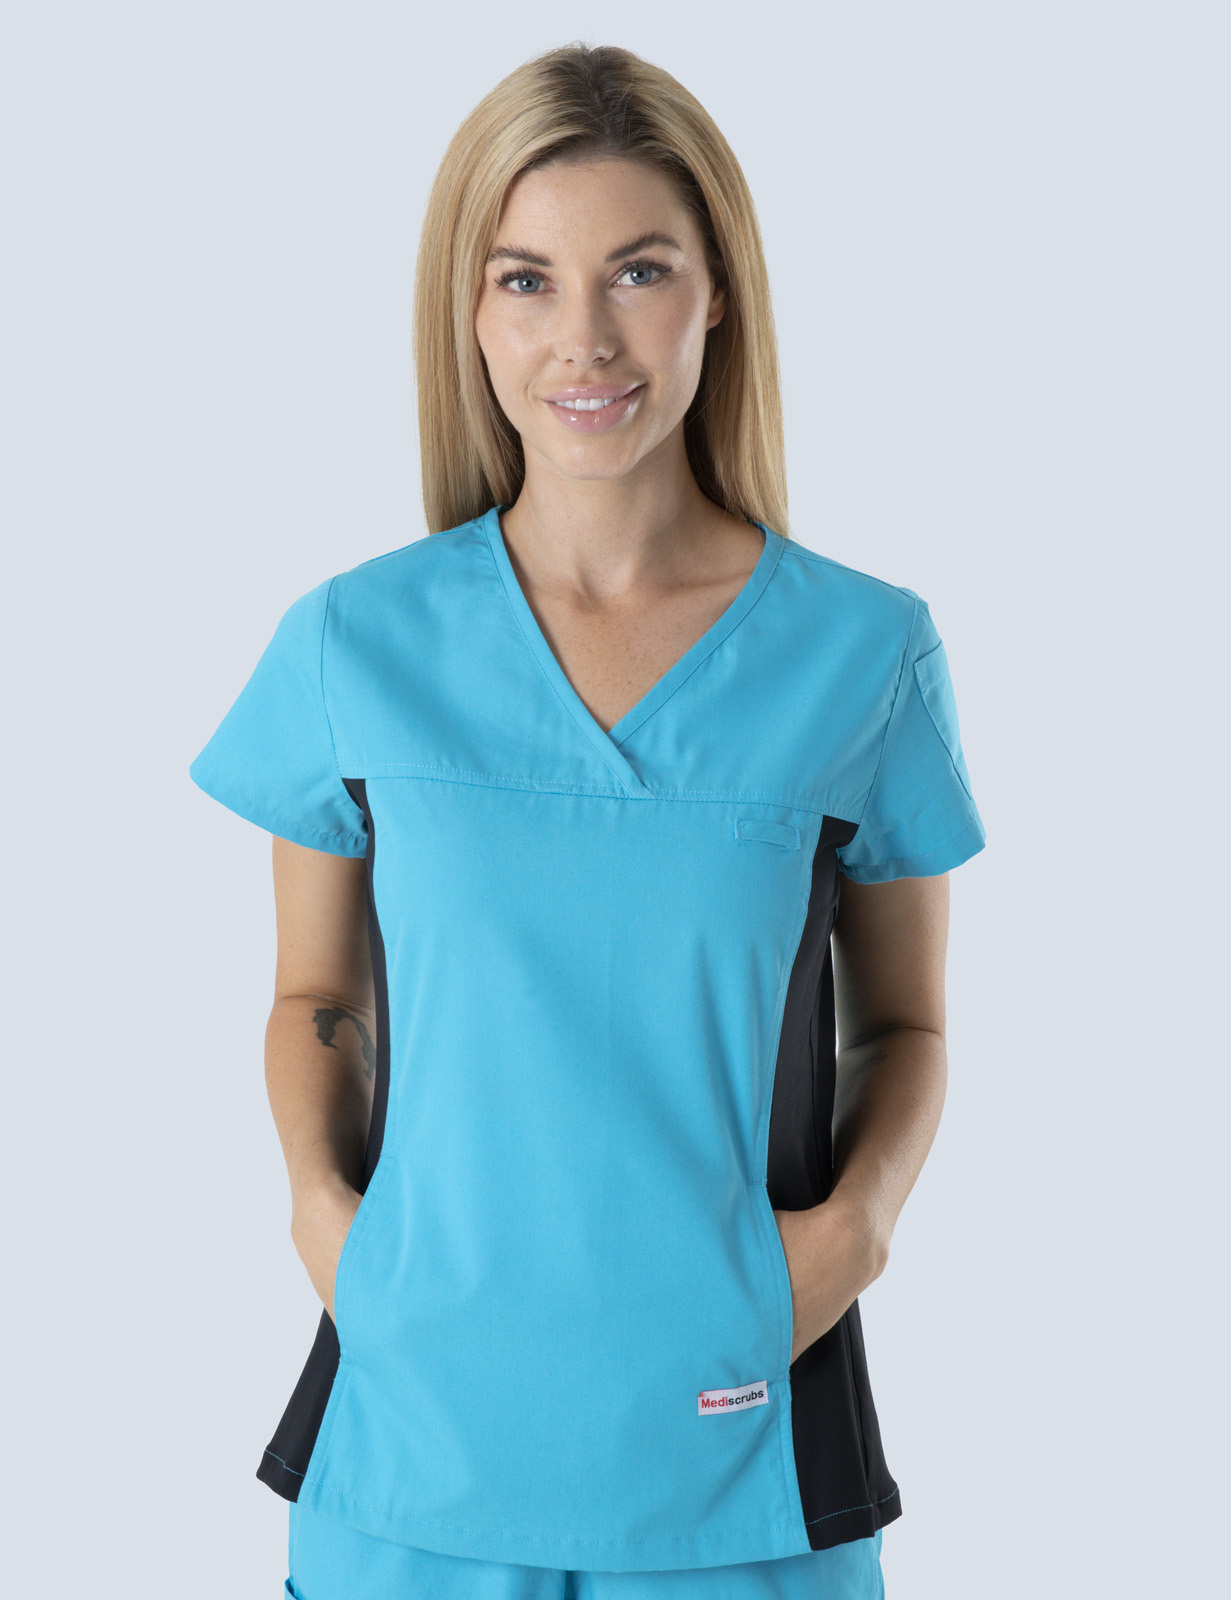 Ashmore Retreat Endorsed Enrolled Nurse Top Only Bundle (Women's Fit Spandex in Aqua incl Logo) 